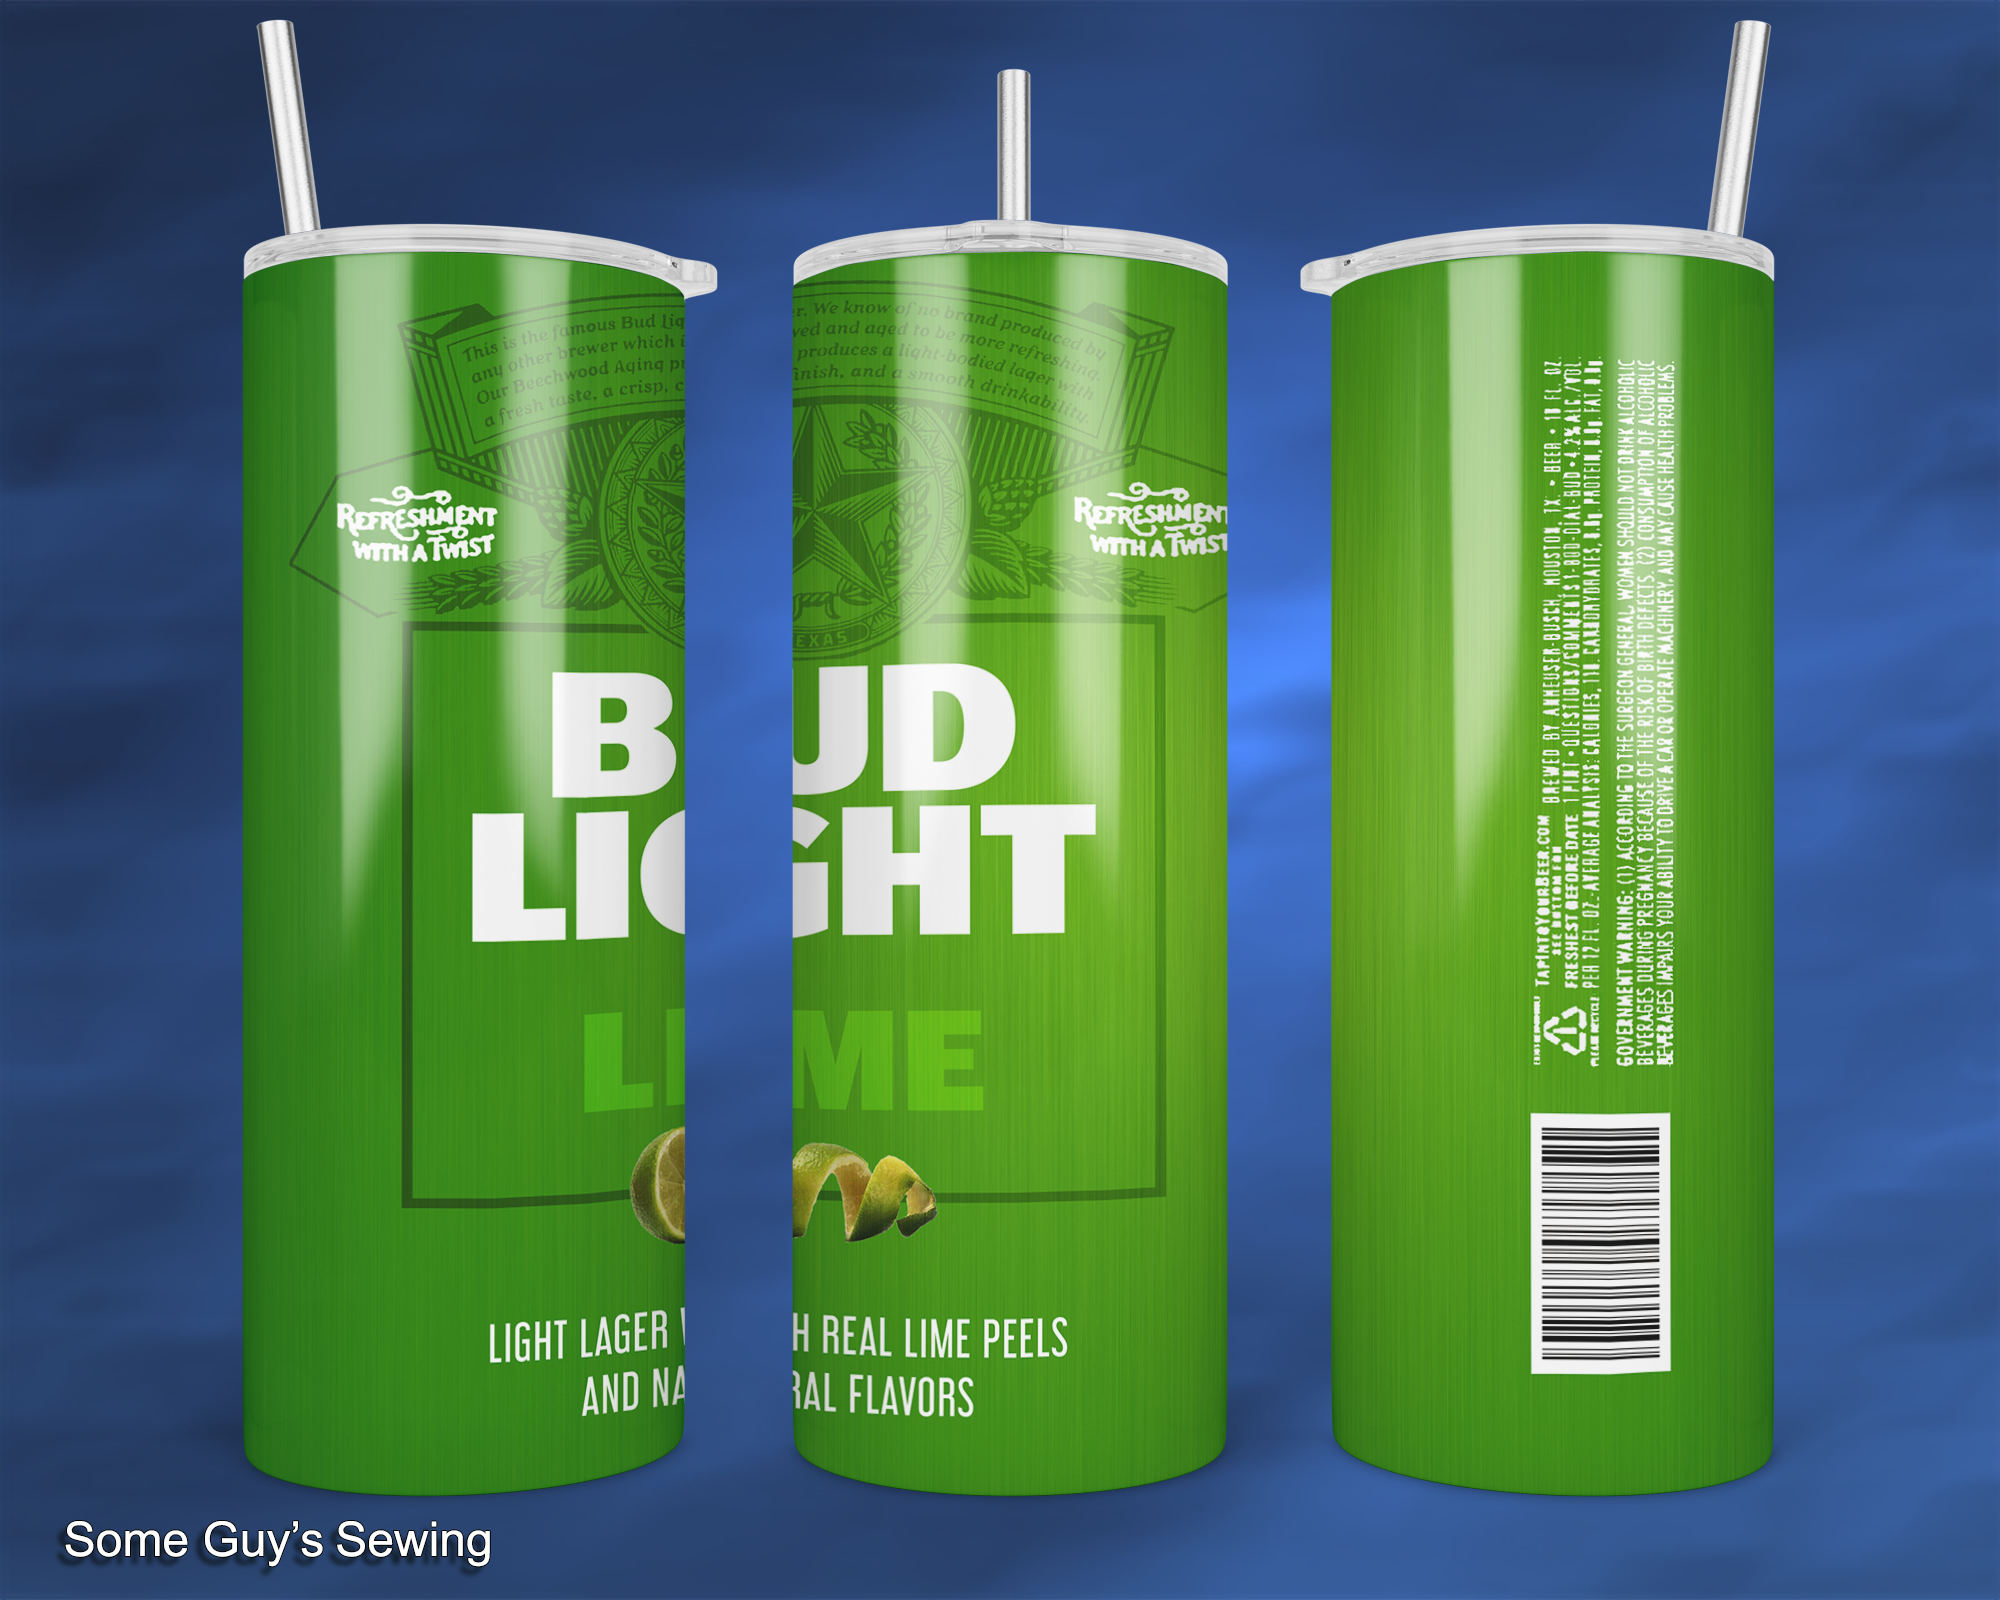 Bud light Lime